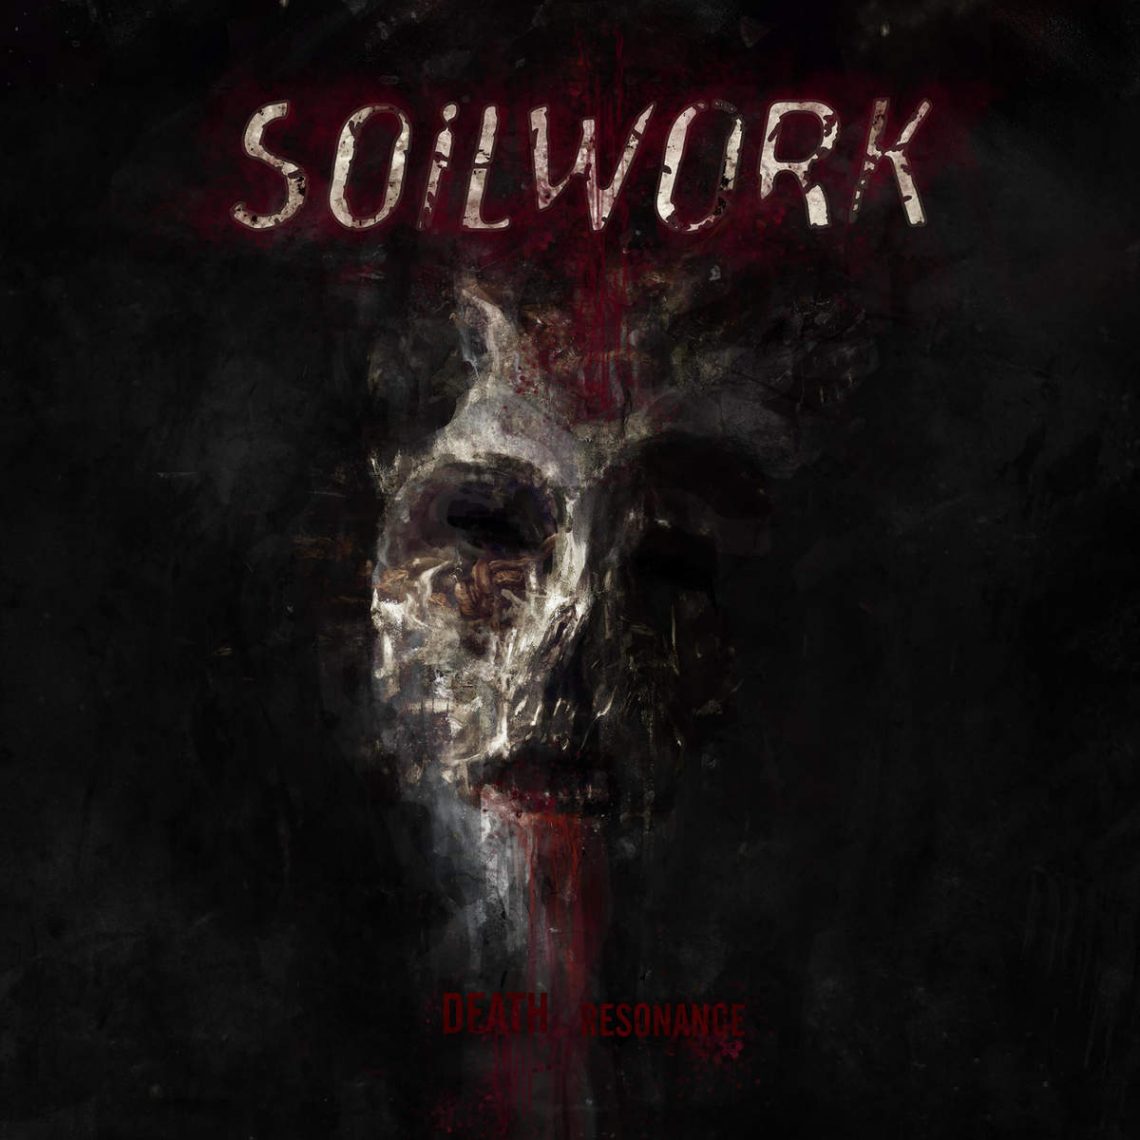 Soilwork – Death Resonance CD Review